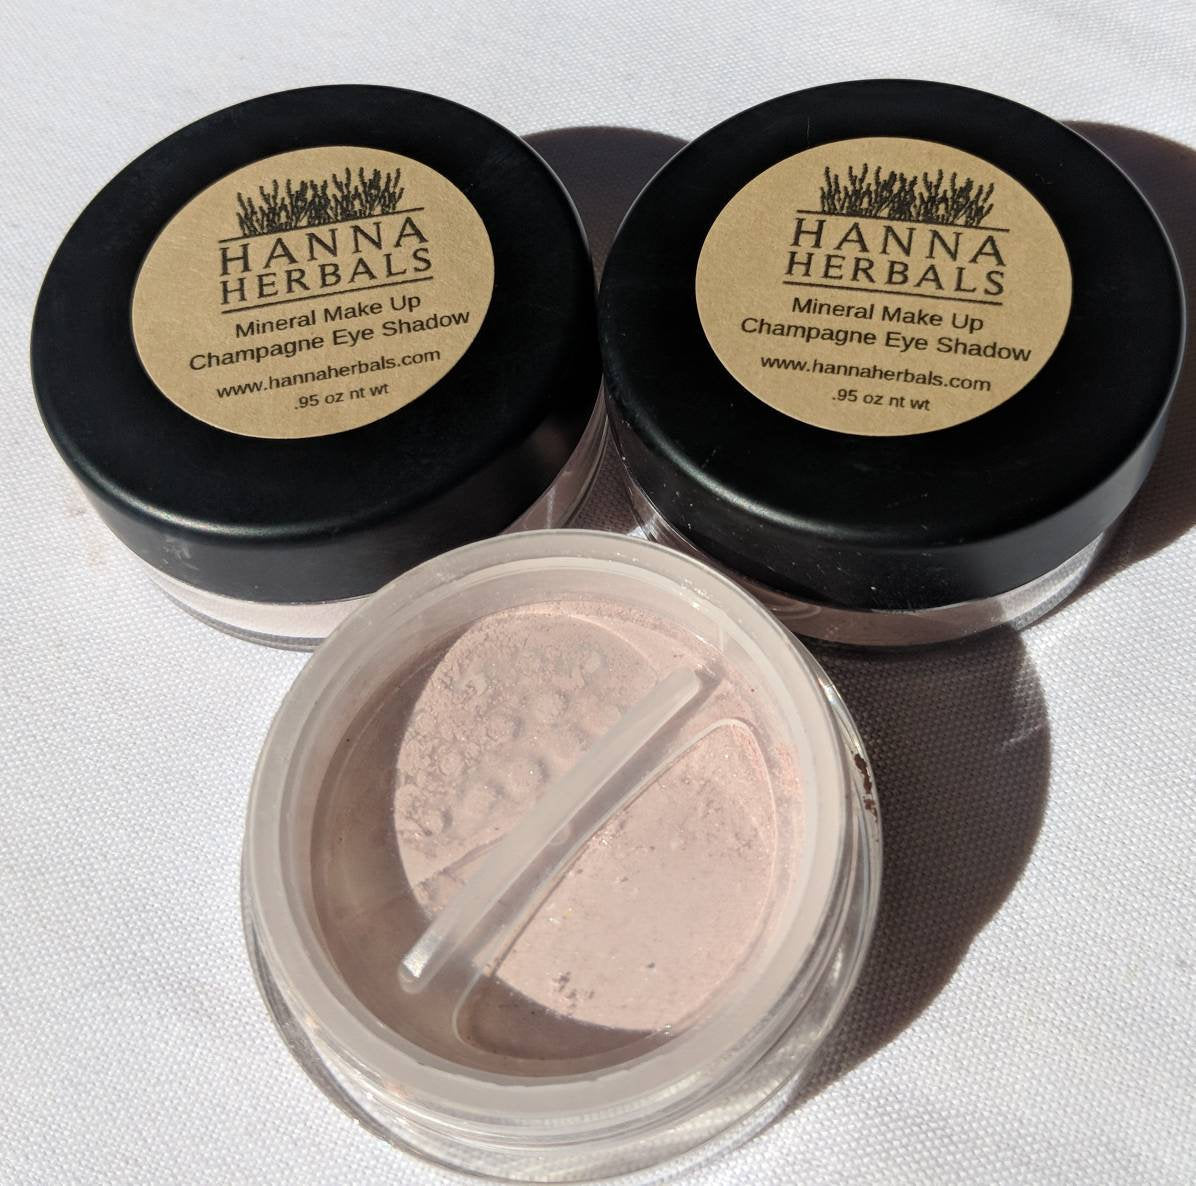 Champagne Eye Shadow - Hanna Herbals